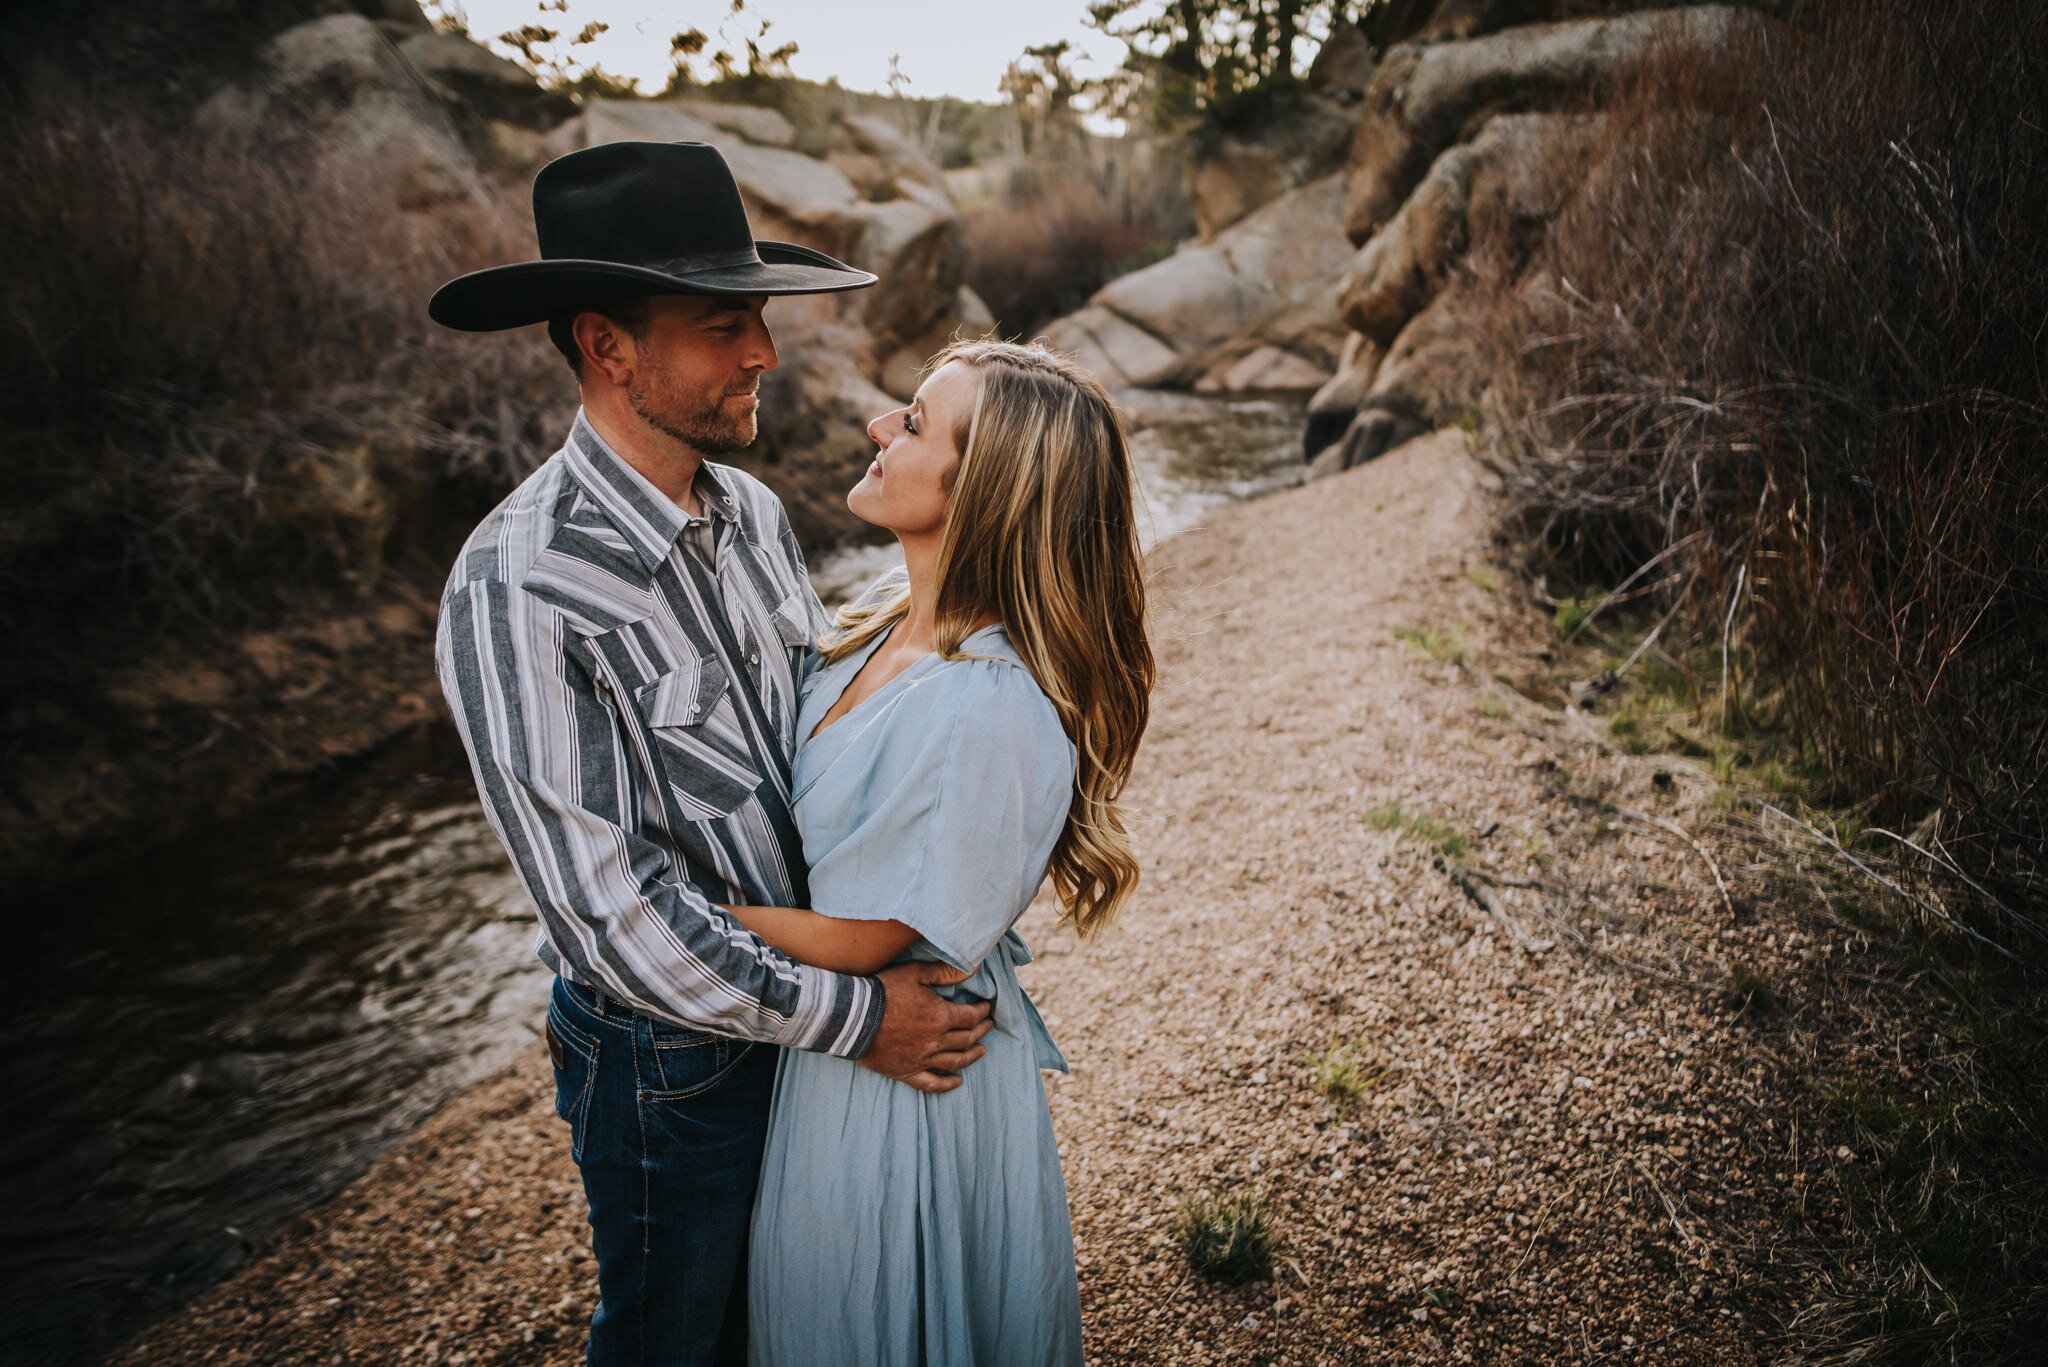 Shelby+and+Brady+Engagement+Session+Cheyenne+Wyoming+Sunset+Water+Fields+Rocks+Nature+Colorado+Photographer+Wild+Prairie+Photography-14-2020.jpeg